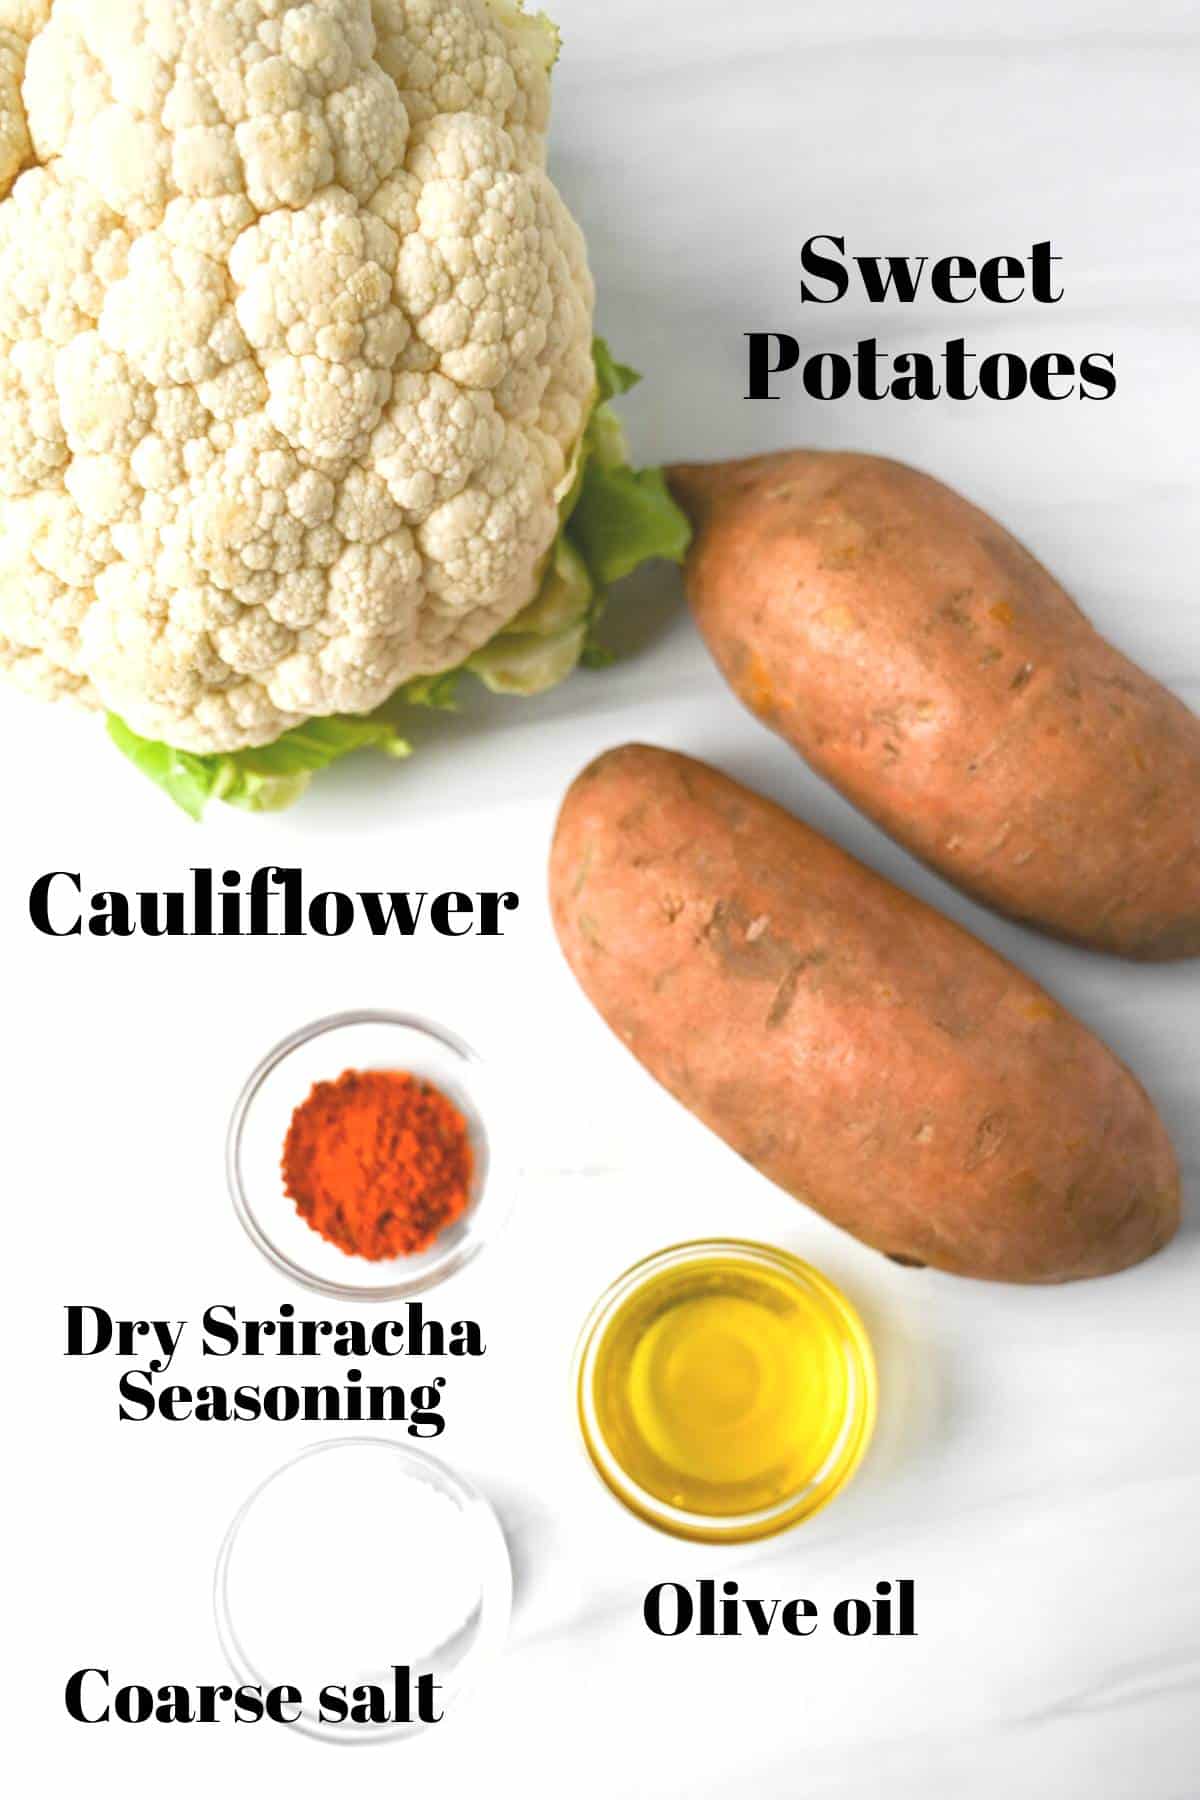 a head of cauliflower, 2 sweet potatoes, oil, sriracha seasoning, and salt on a counter